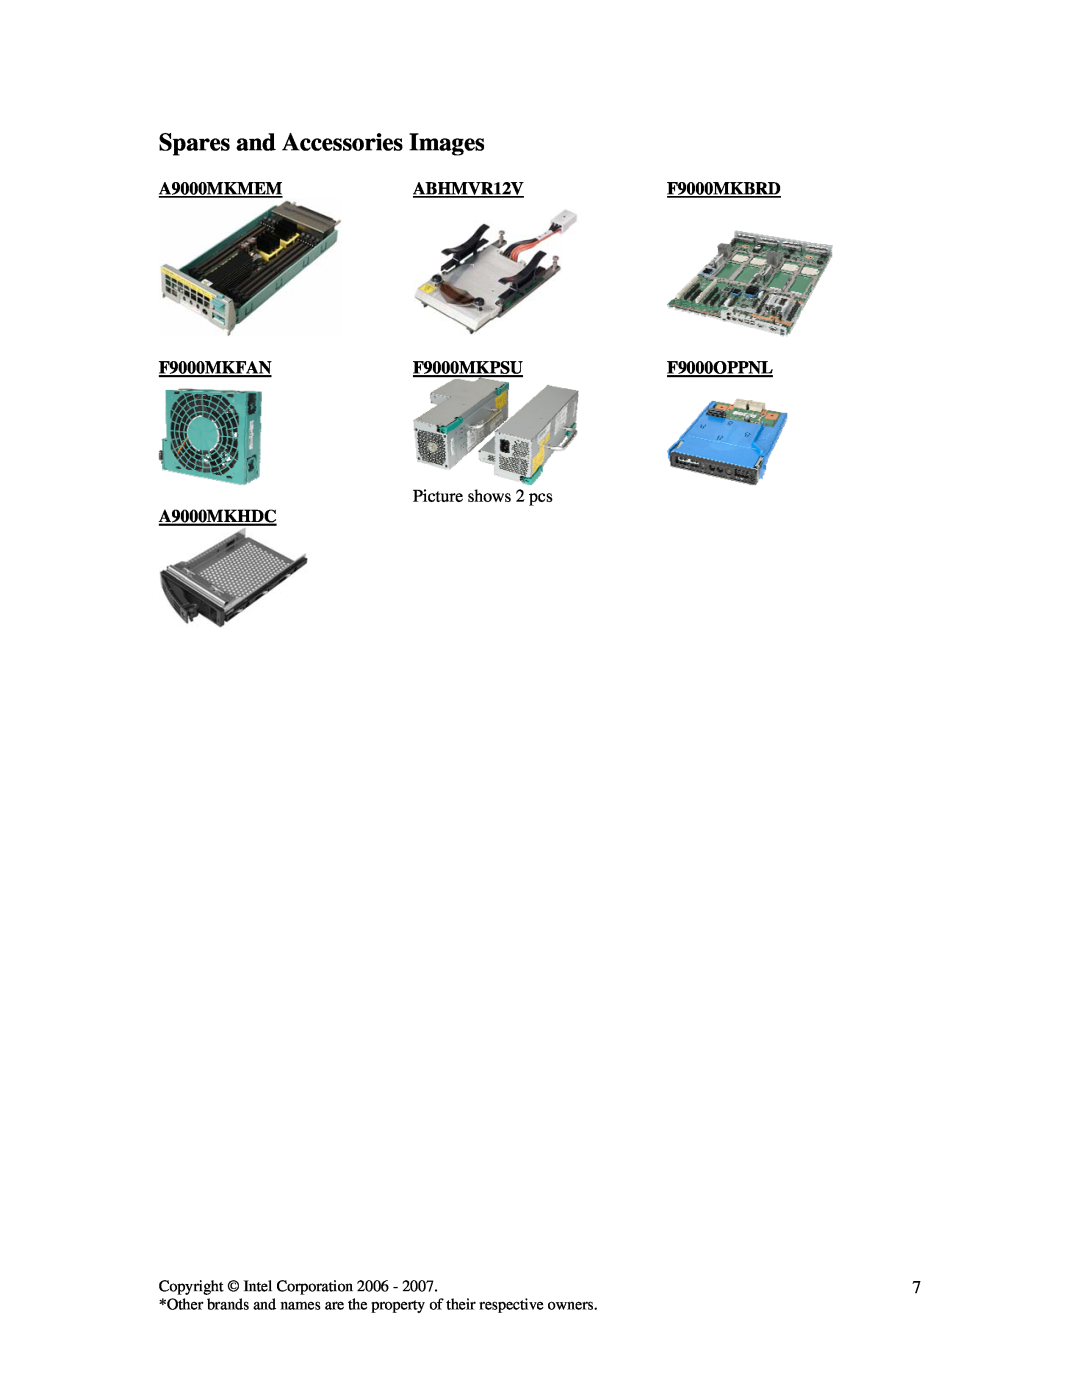 Intel SR9000MK4U Spares and Accessories Images, A9000MKMEM, ABHMVR12V, F9000MKBRD, F9000MKFAN, F9000MKPSU, F9000OPPNL 